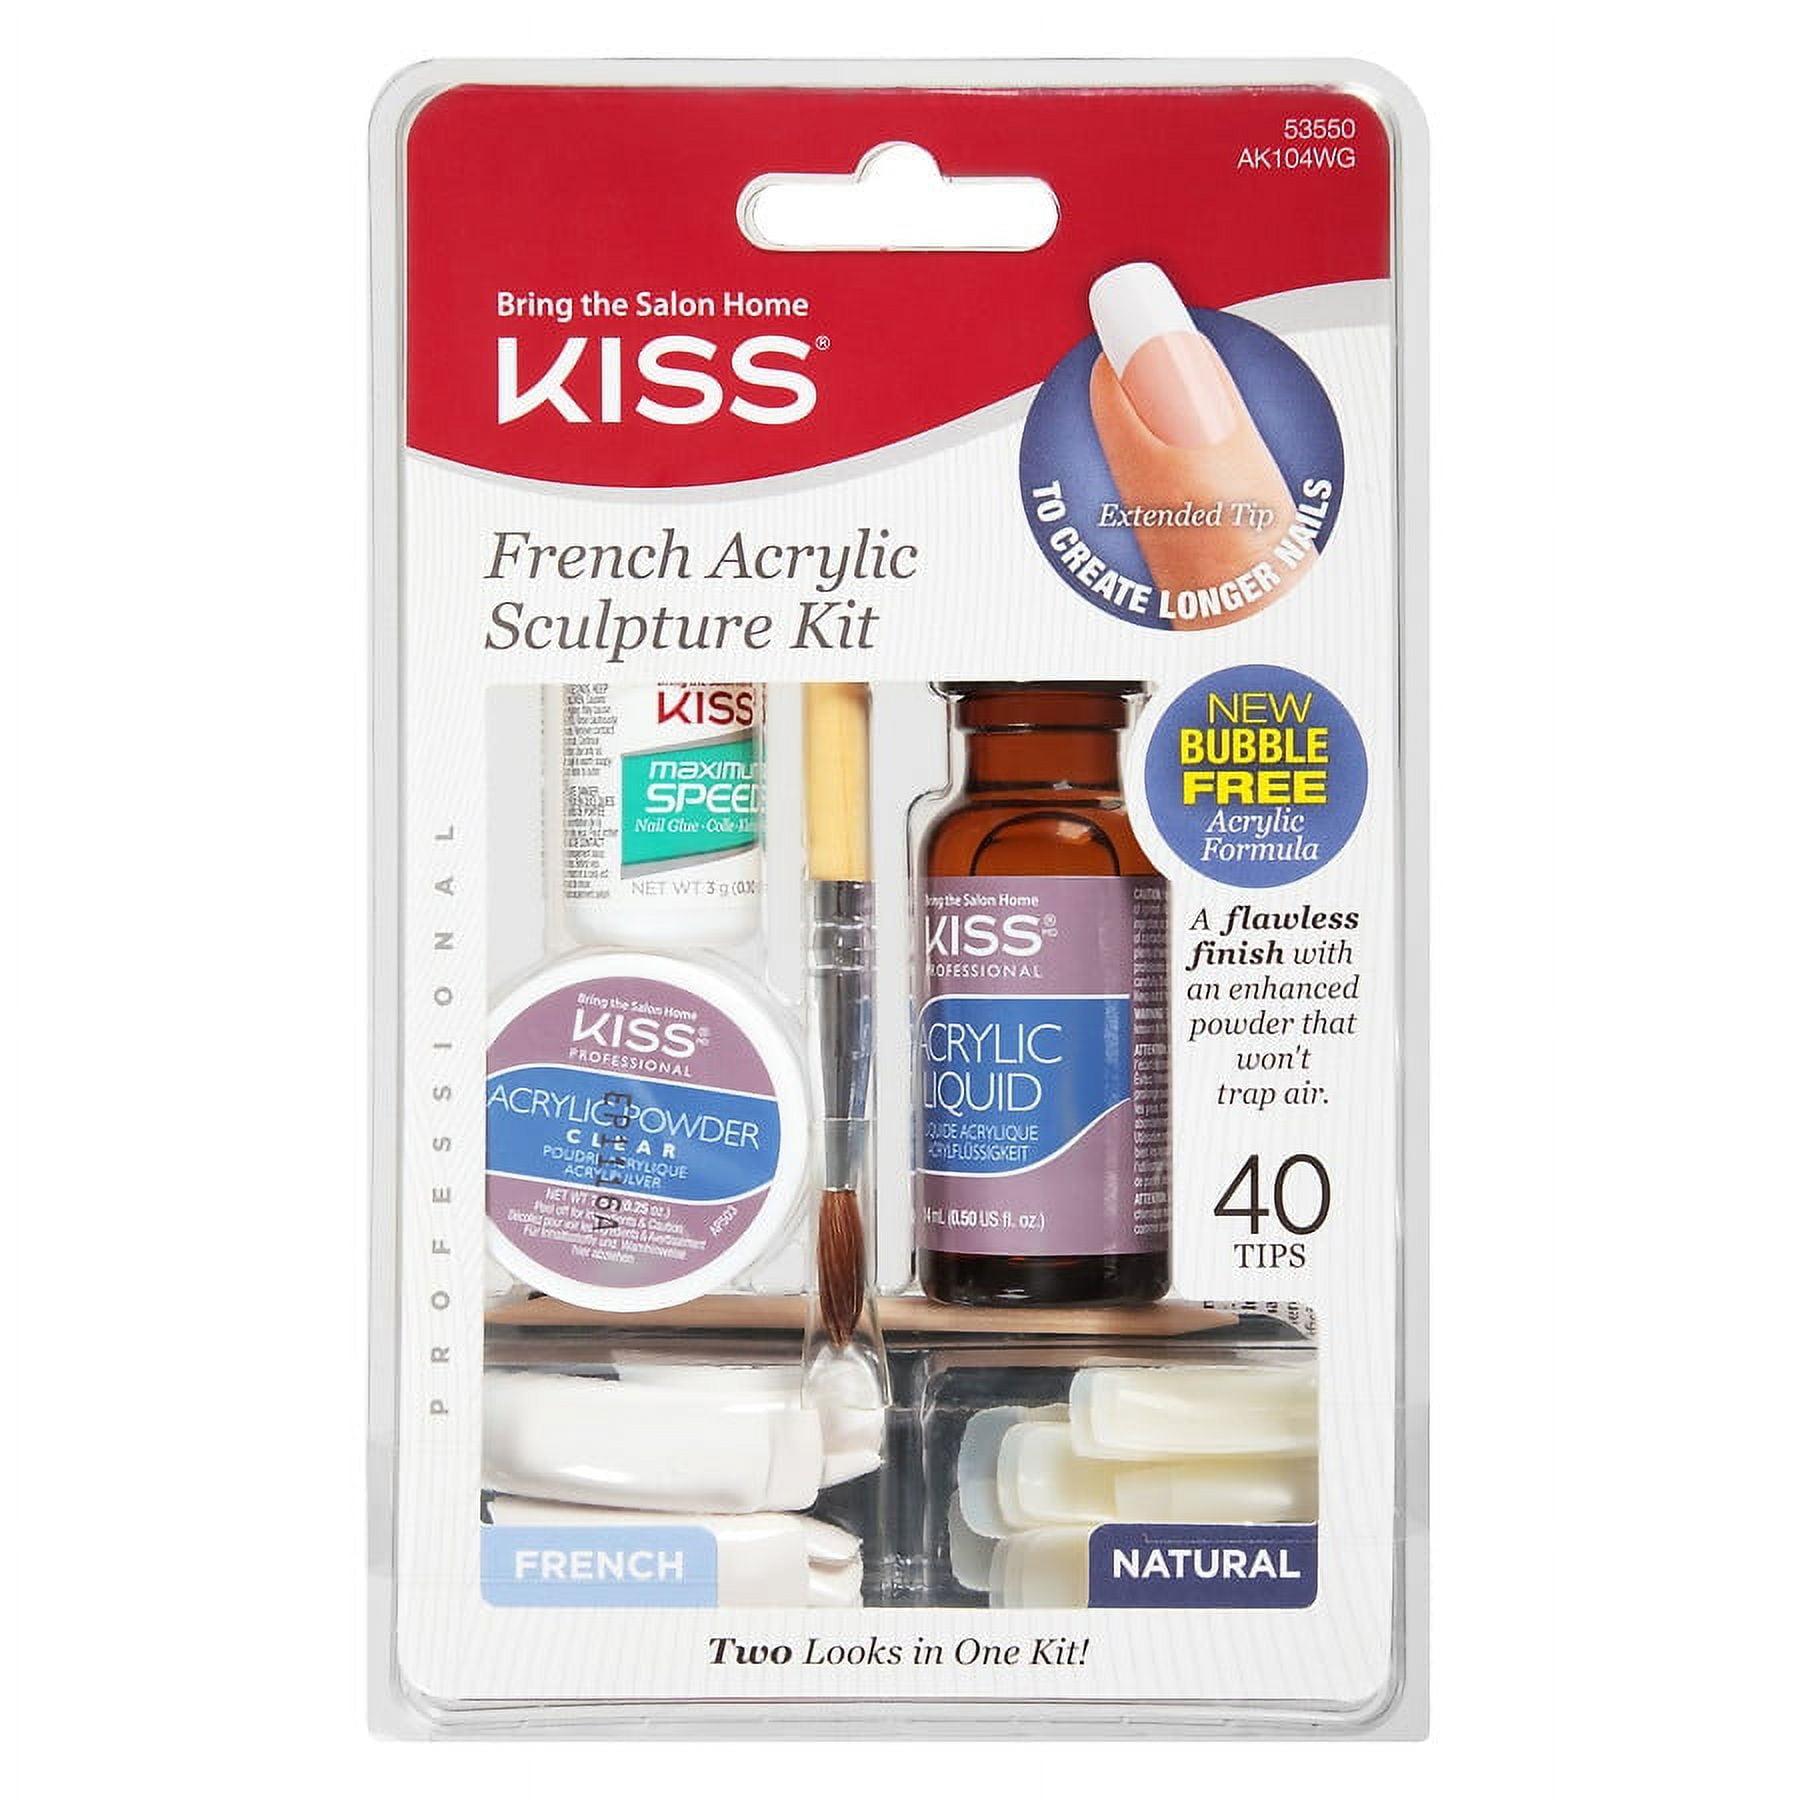 Kiss Acrylic Fill Kit